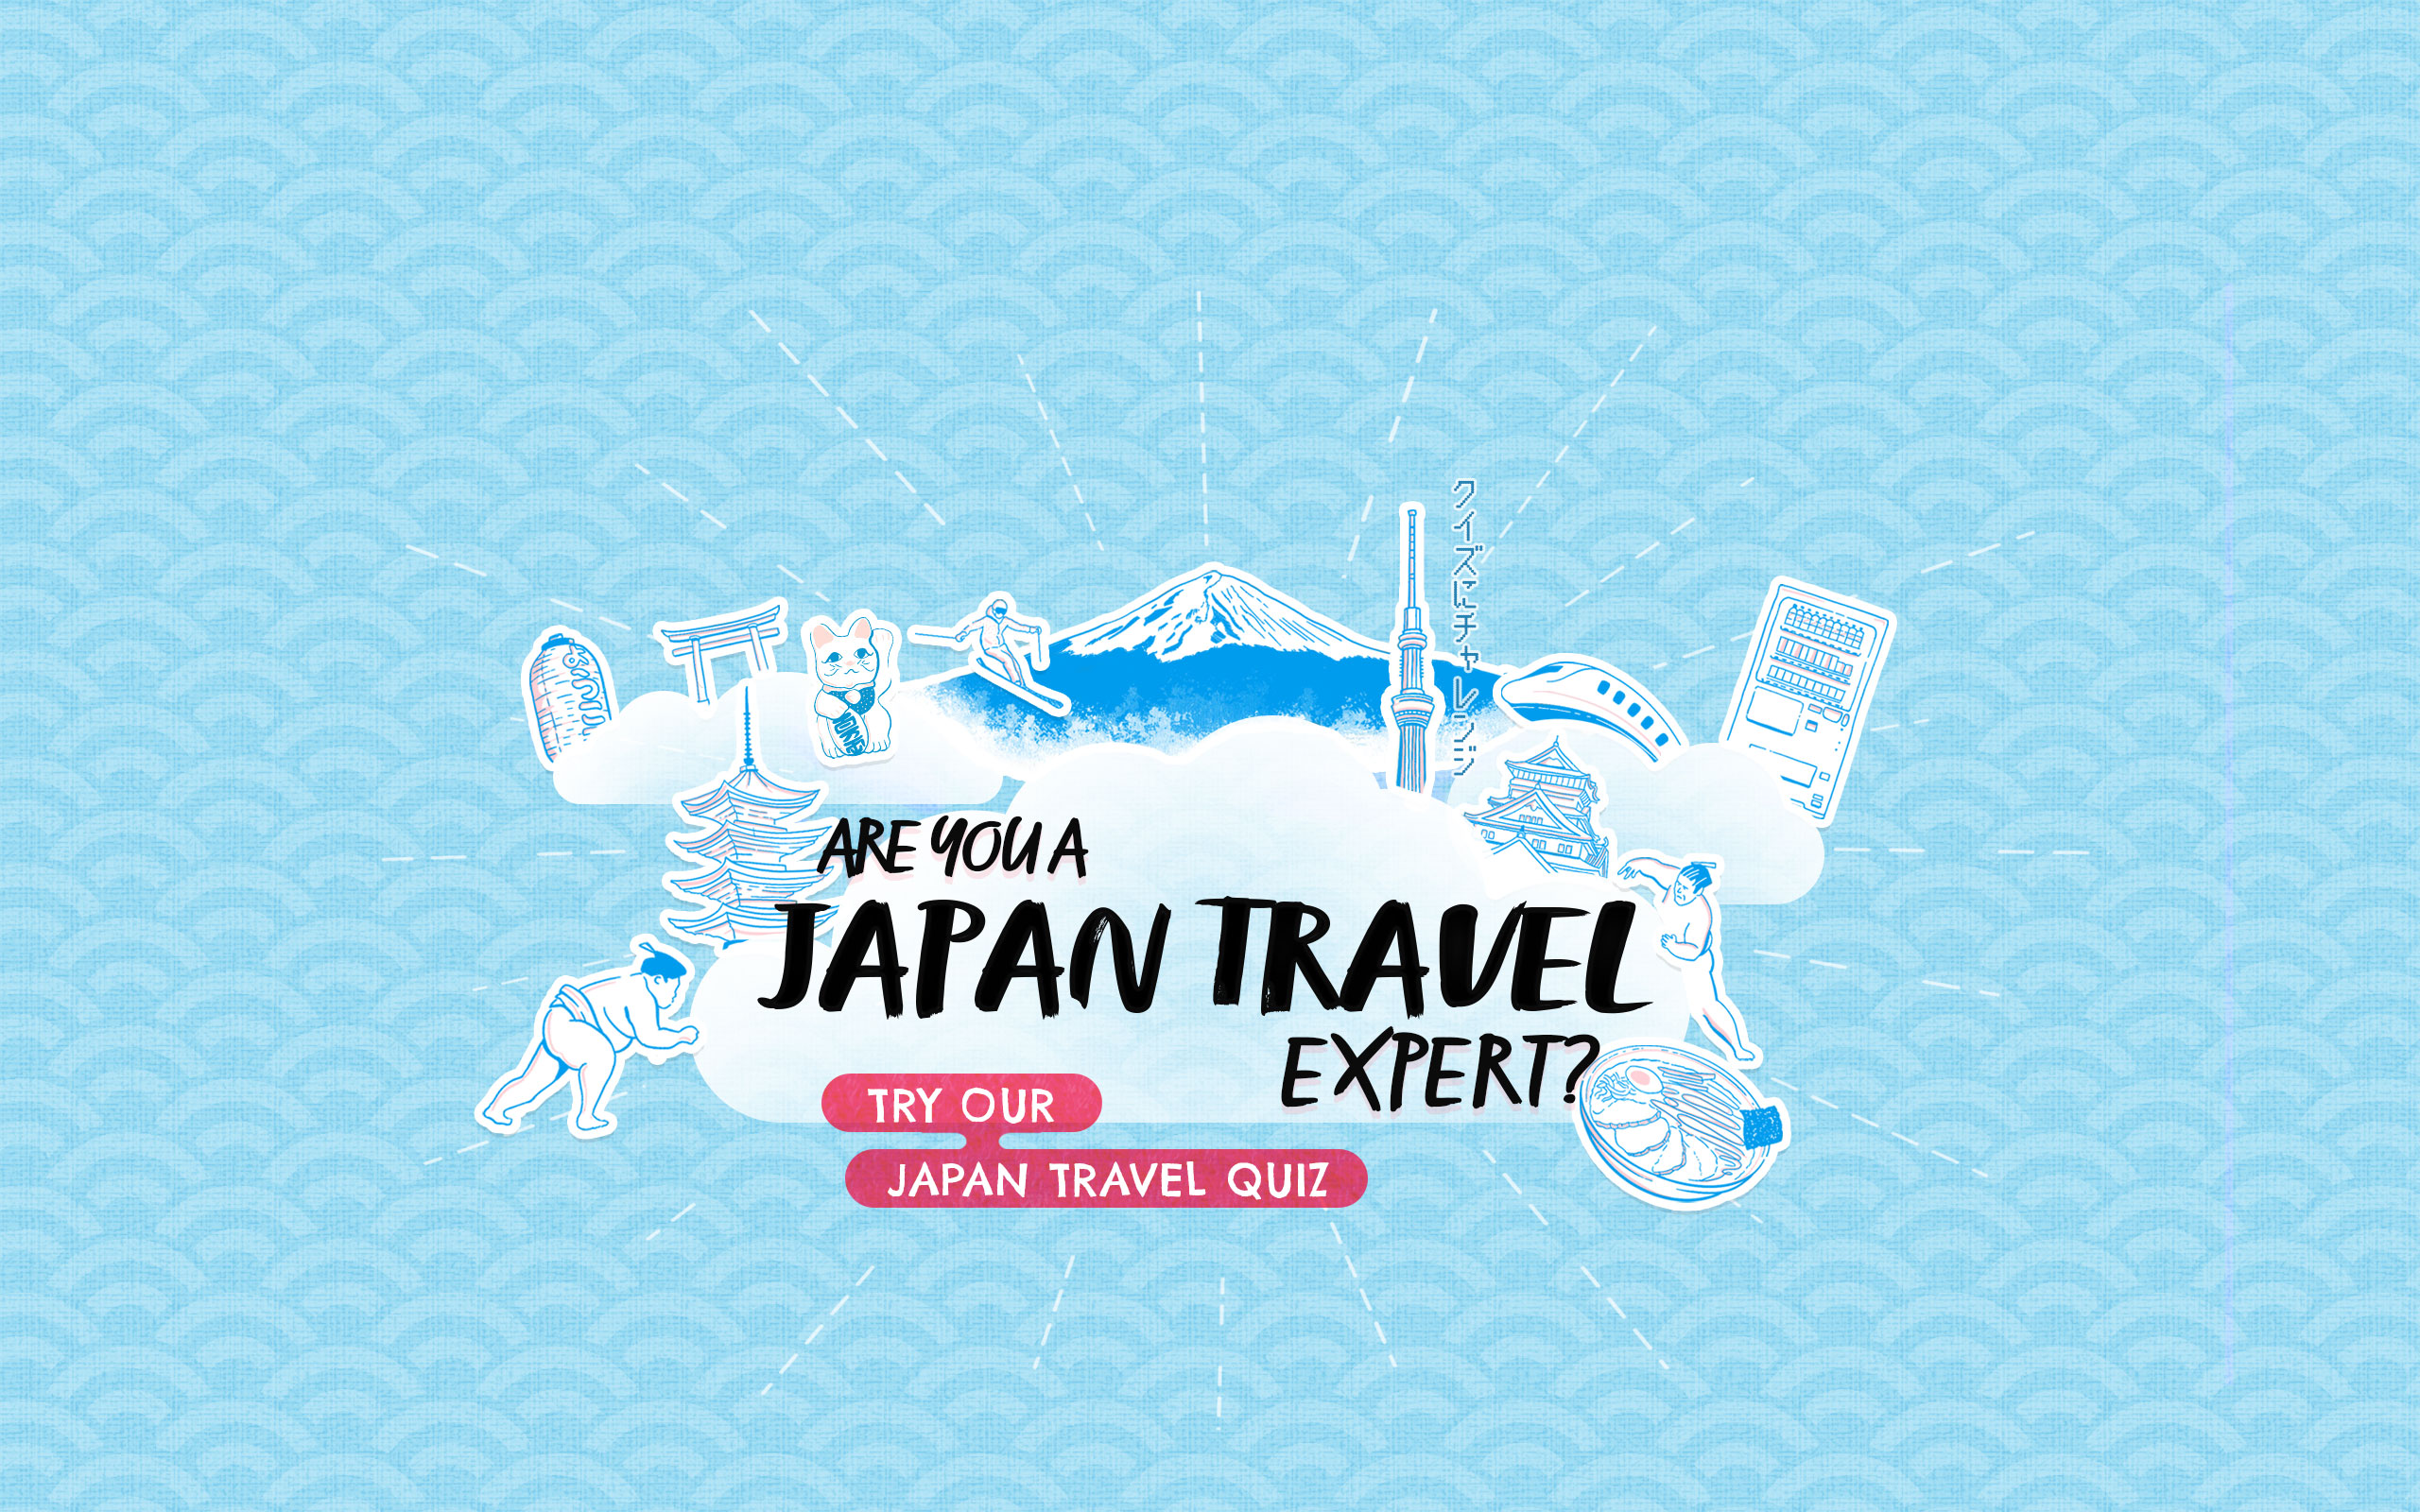 Japan travel quiz